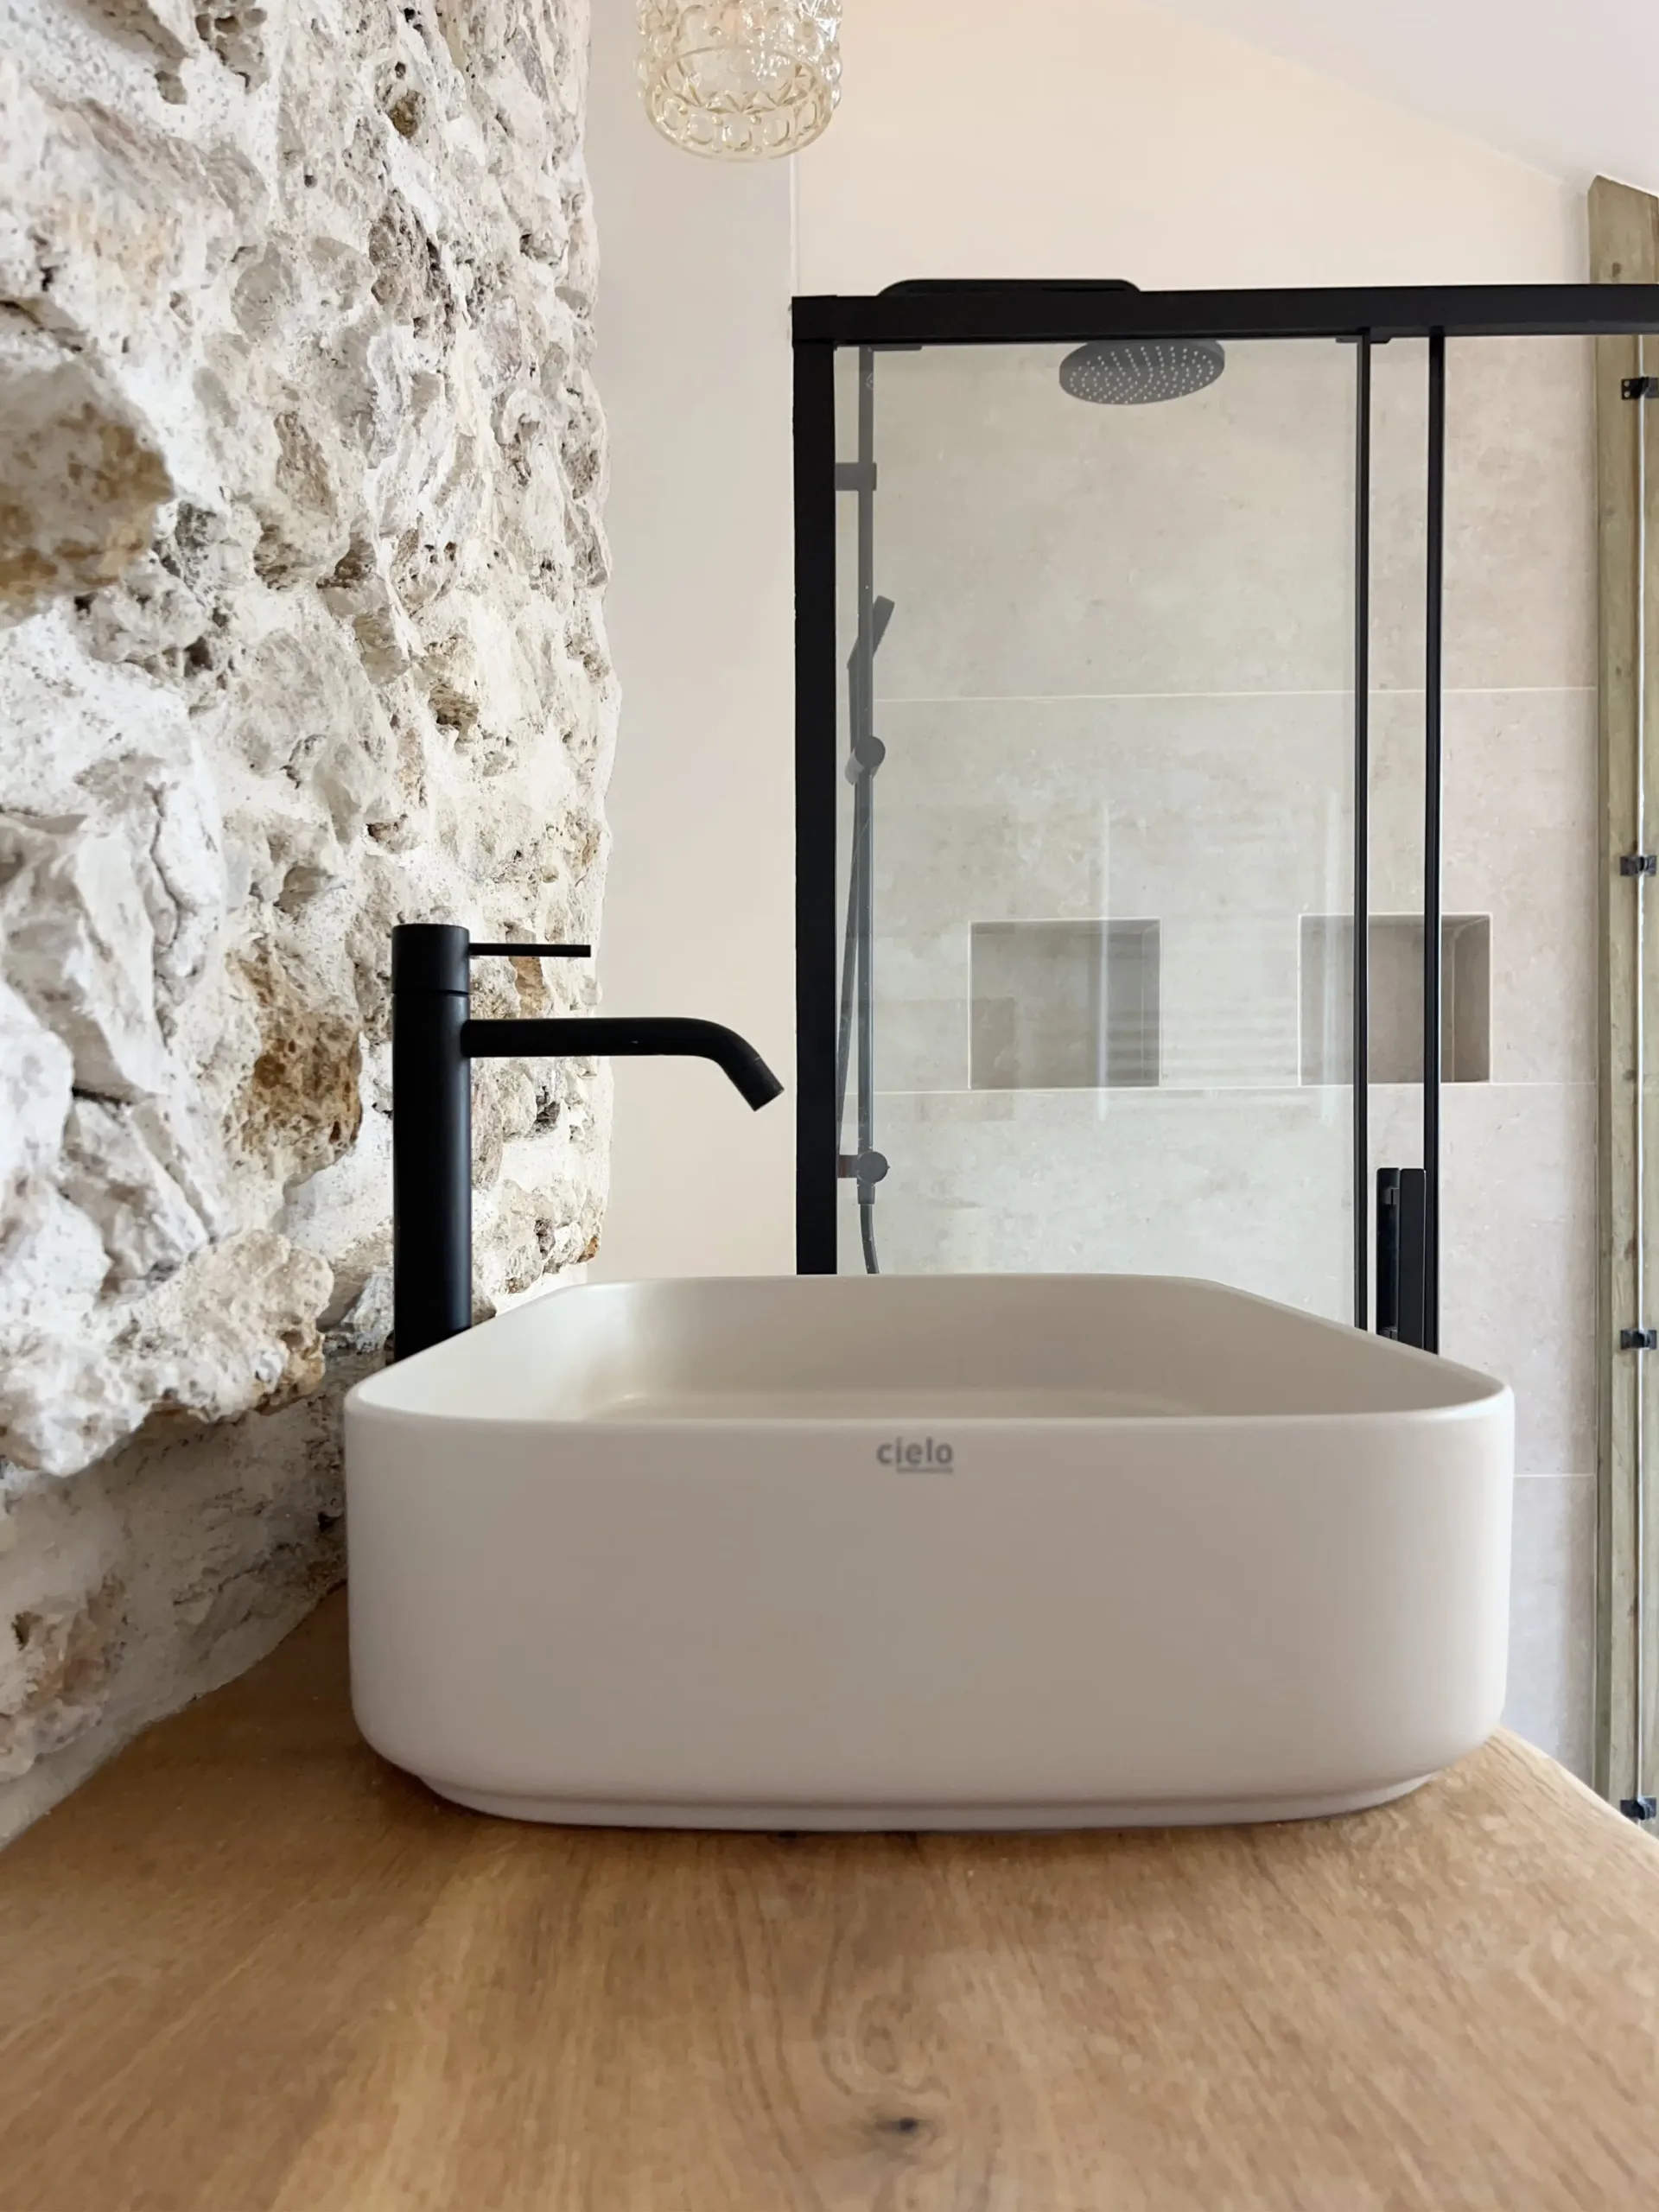 vasque cielo - vasque à poser - niche carrelage - salle de bain bois pierre - ceramica cielo